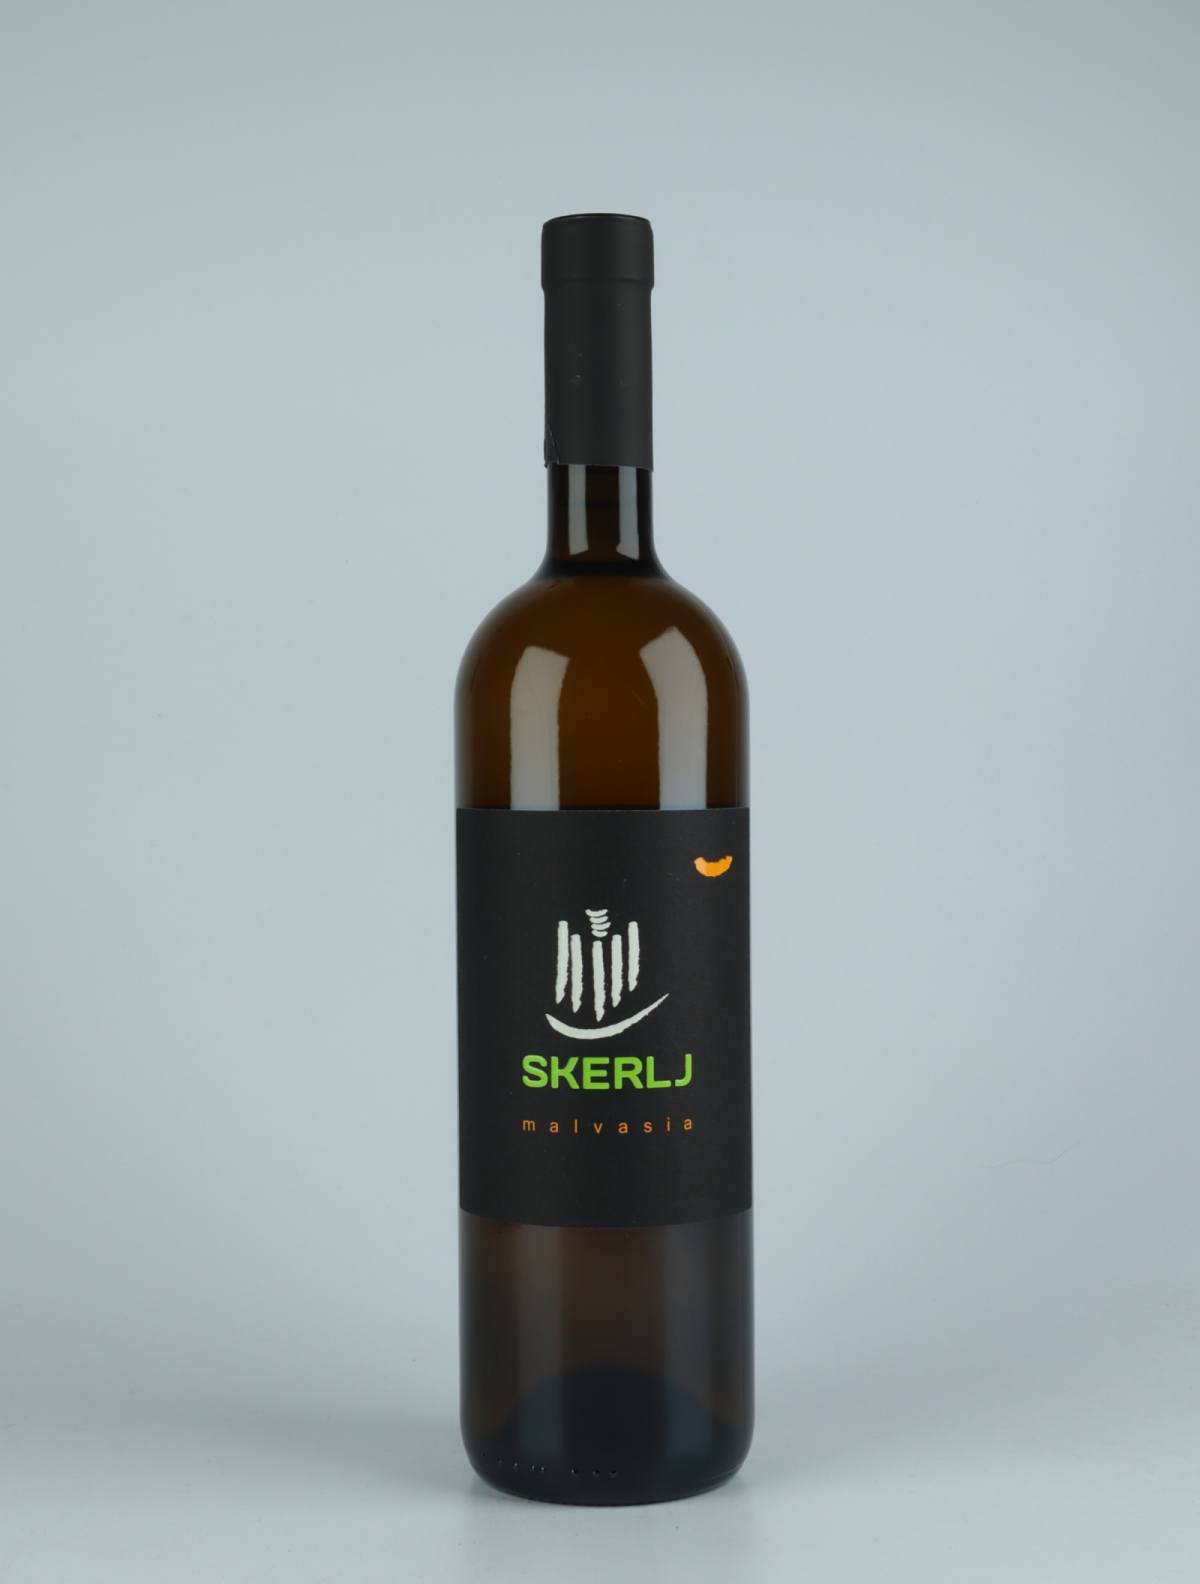 A bottle 2019 Malvasia Orange wine from Skerlj, Friuli in Italy